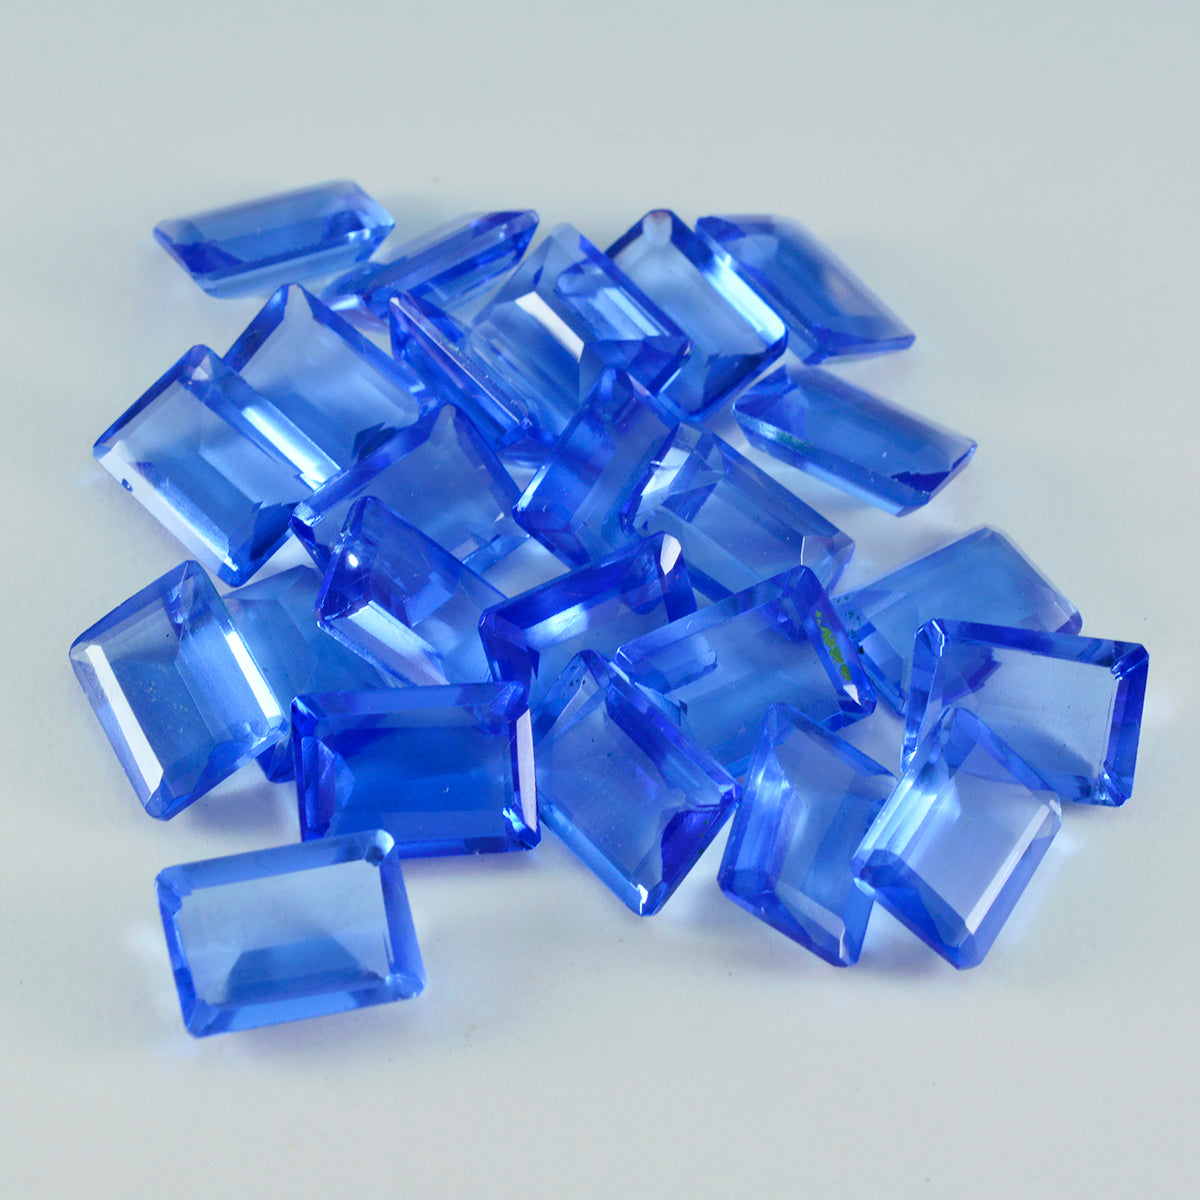 riyogems 1pc zaffiro blu cz sfaccettato 6x8 mm forma ottagonale gemma sciolta di qualità gradevole